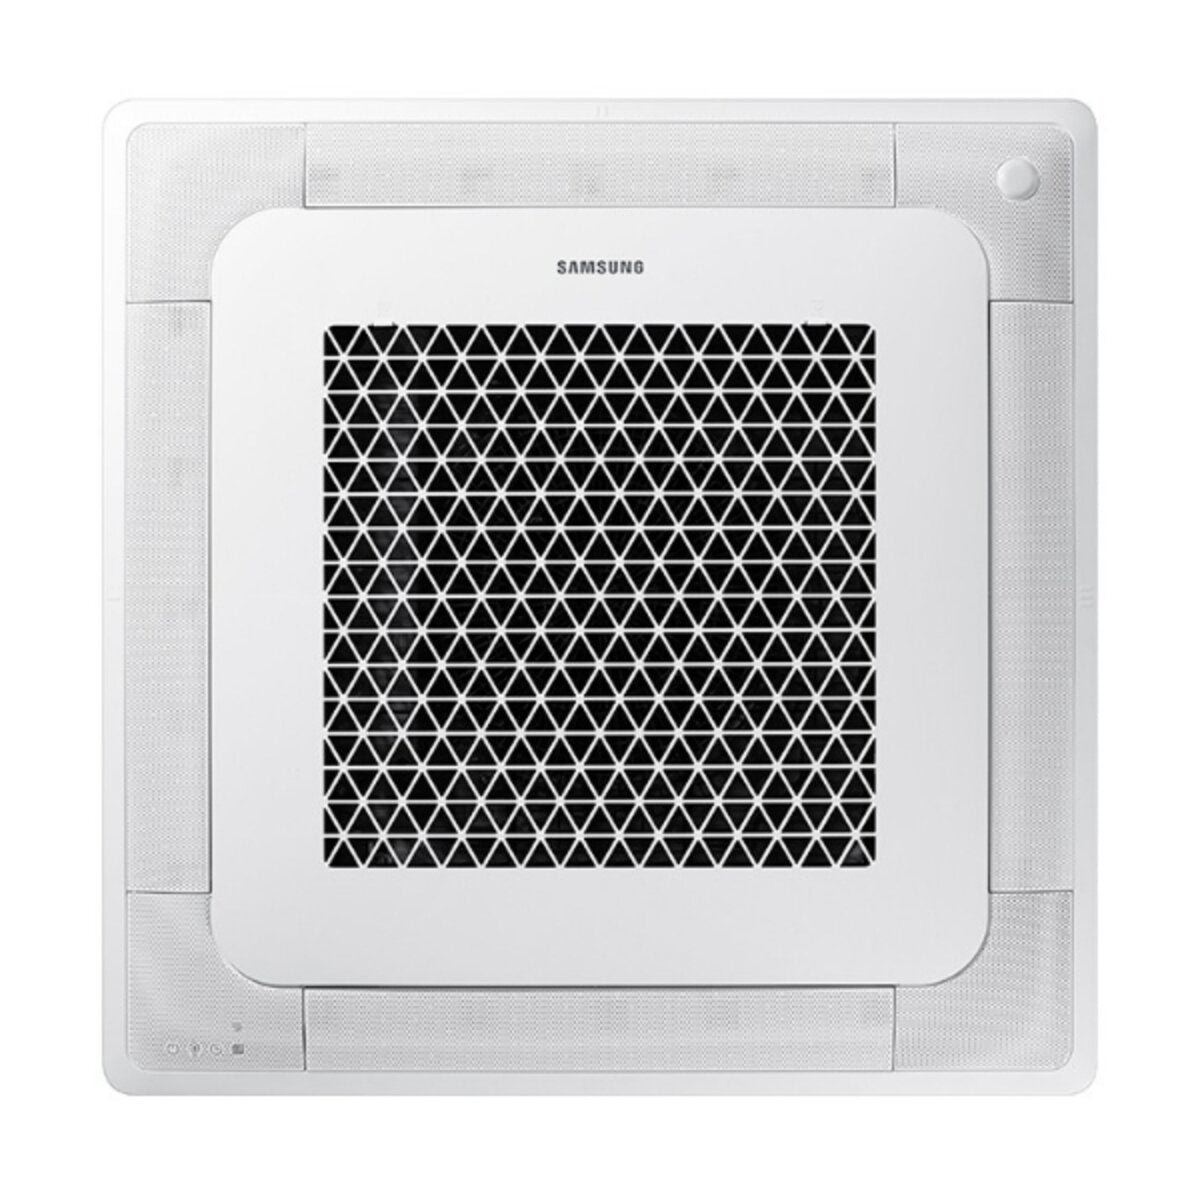 Samsung Air conditioner Windfree 4-way square split 7000 + 9000 + 9000 + 12000 BTU inverter A ++ outdoor unit 8.0 kW